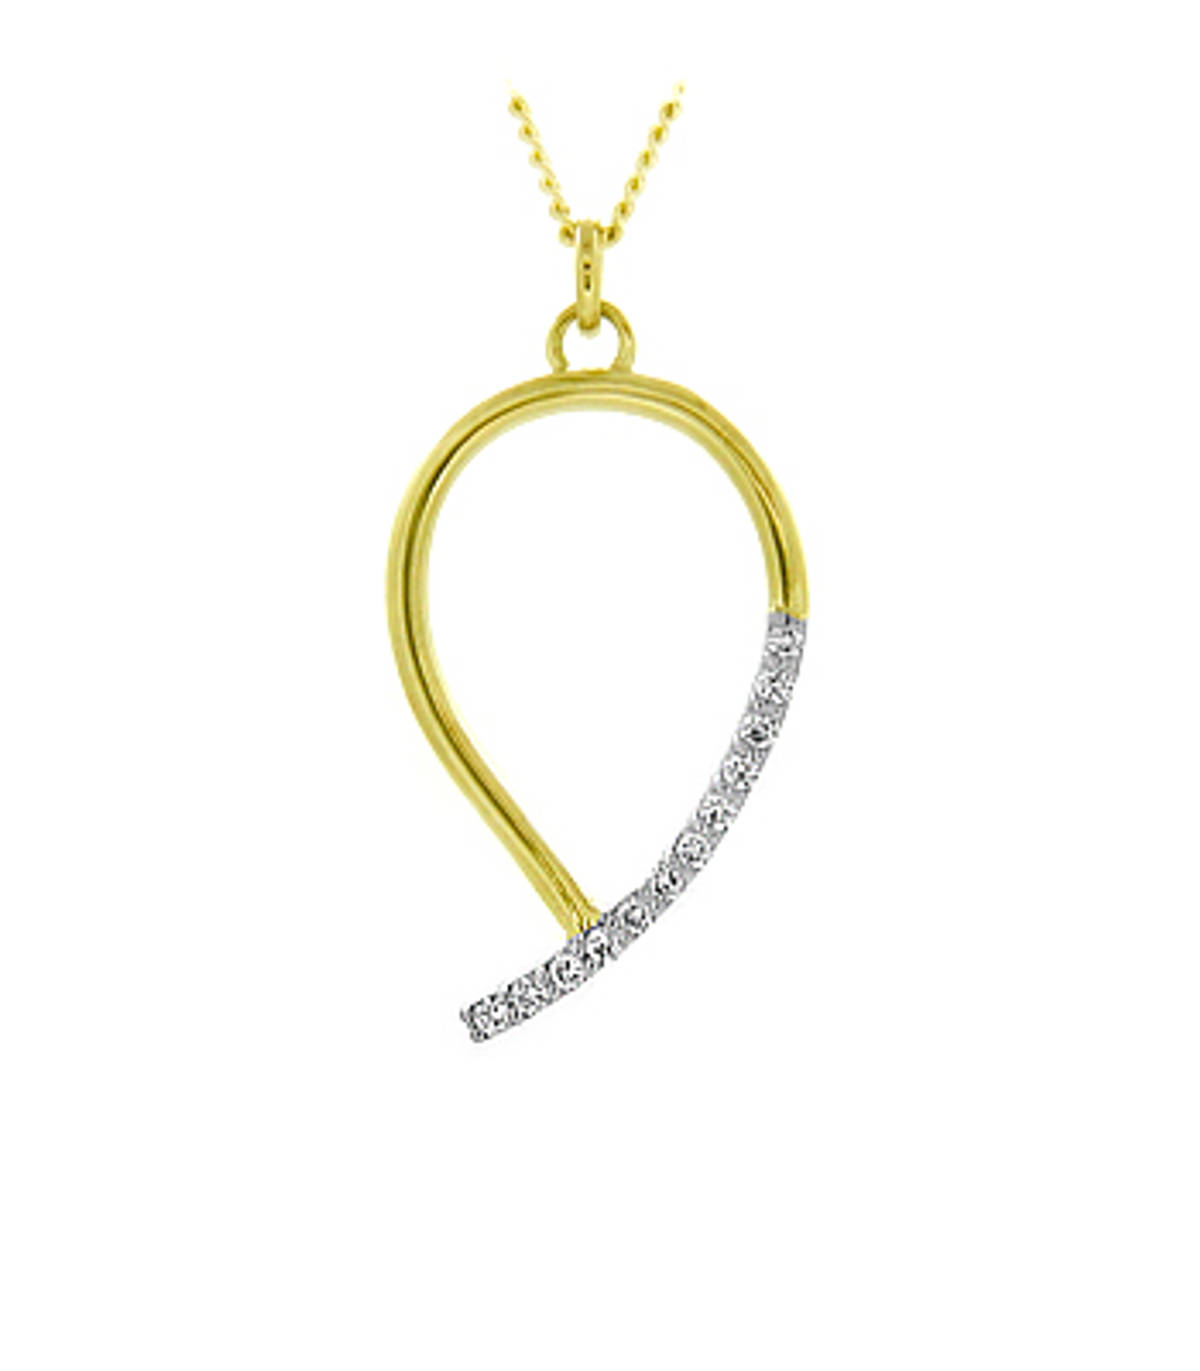 18 carat yellow gold pendant with 0.18cts diamonds